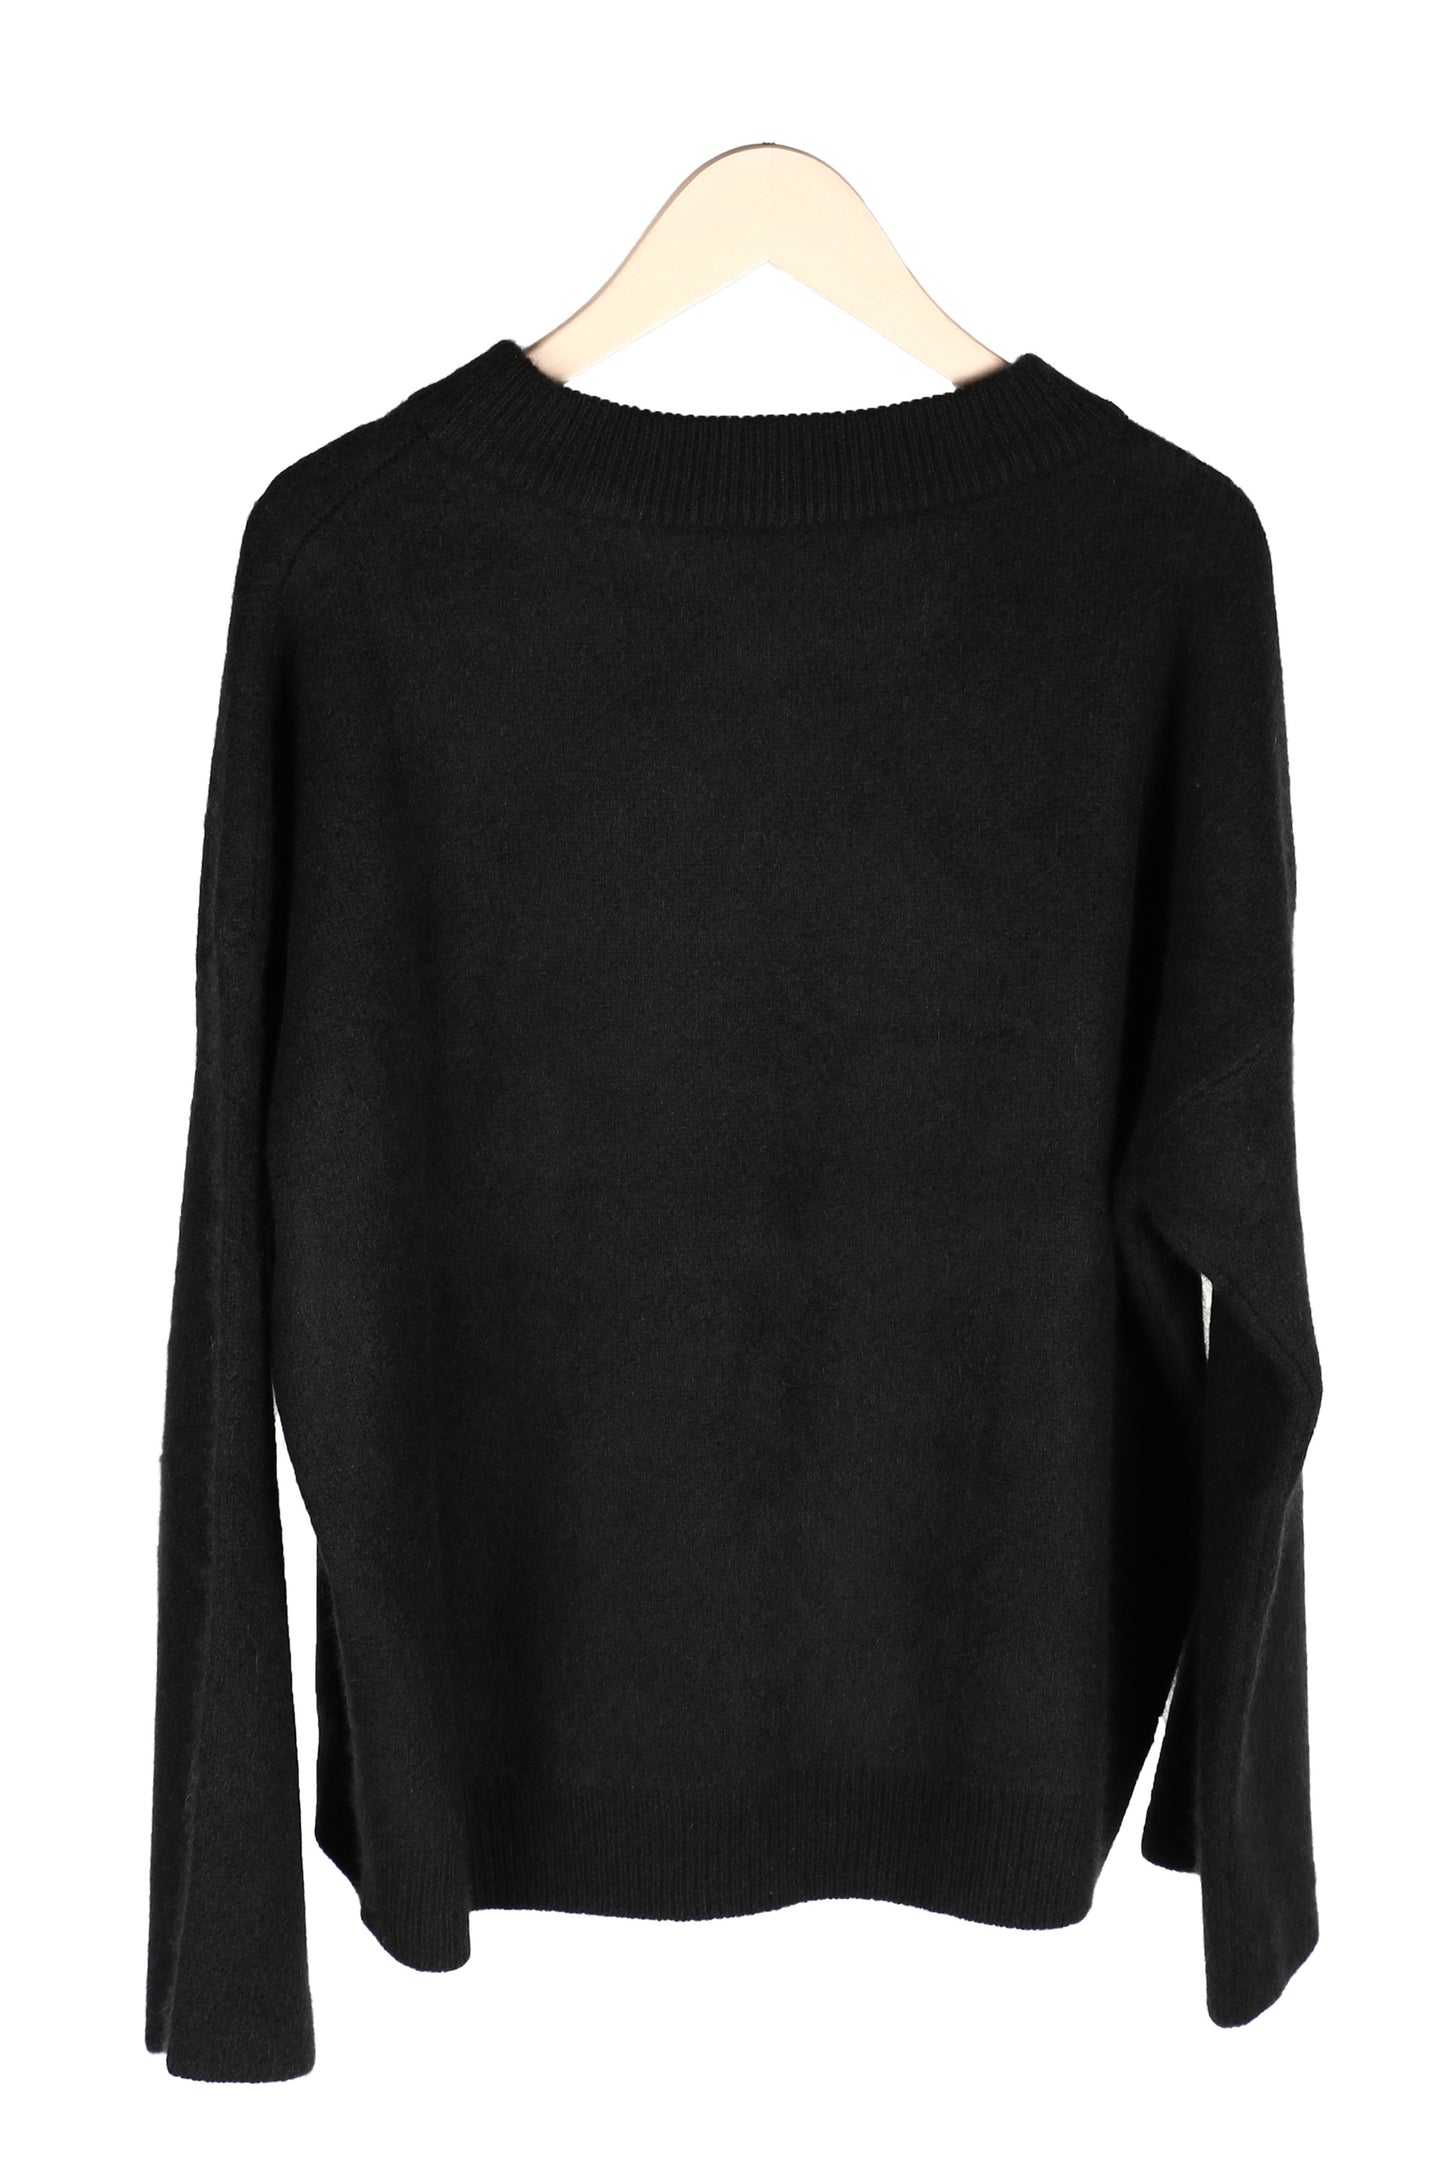 Oversize Black Cashmere Sweater